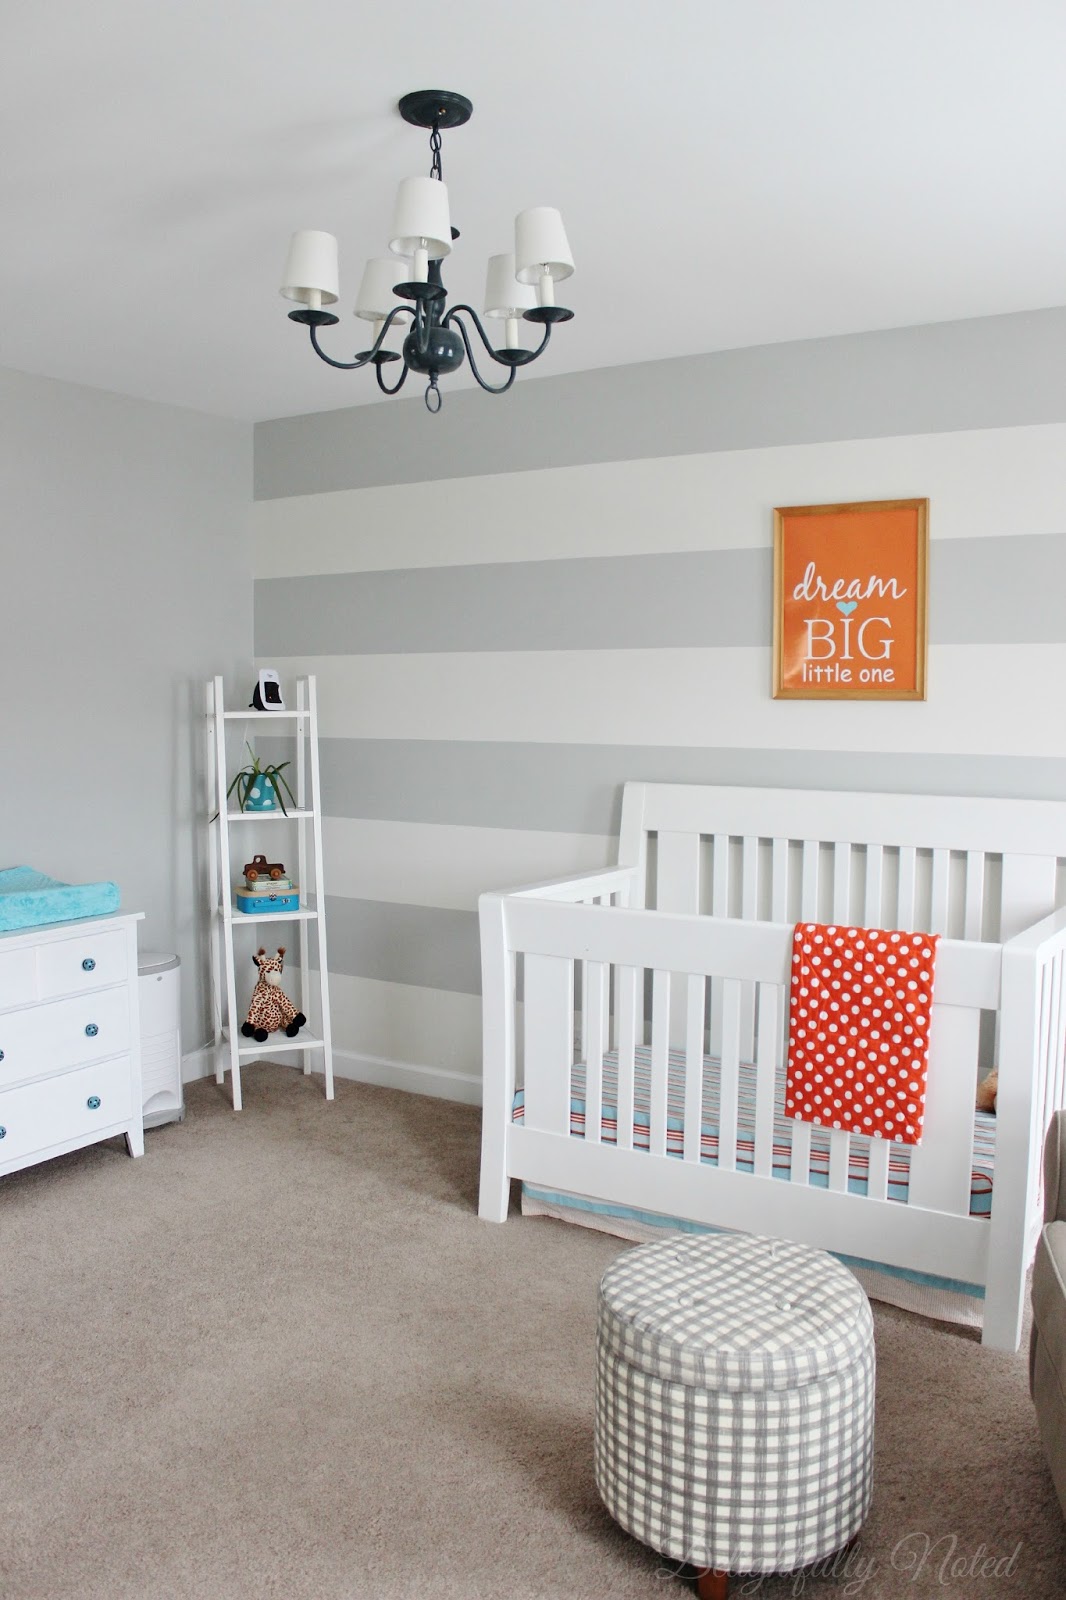 Aqua, Orange, and Grey Nursery with Stripe Wall and Lots of DIY Projects #nursery #diy